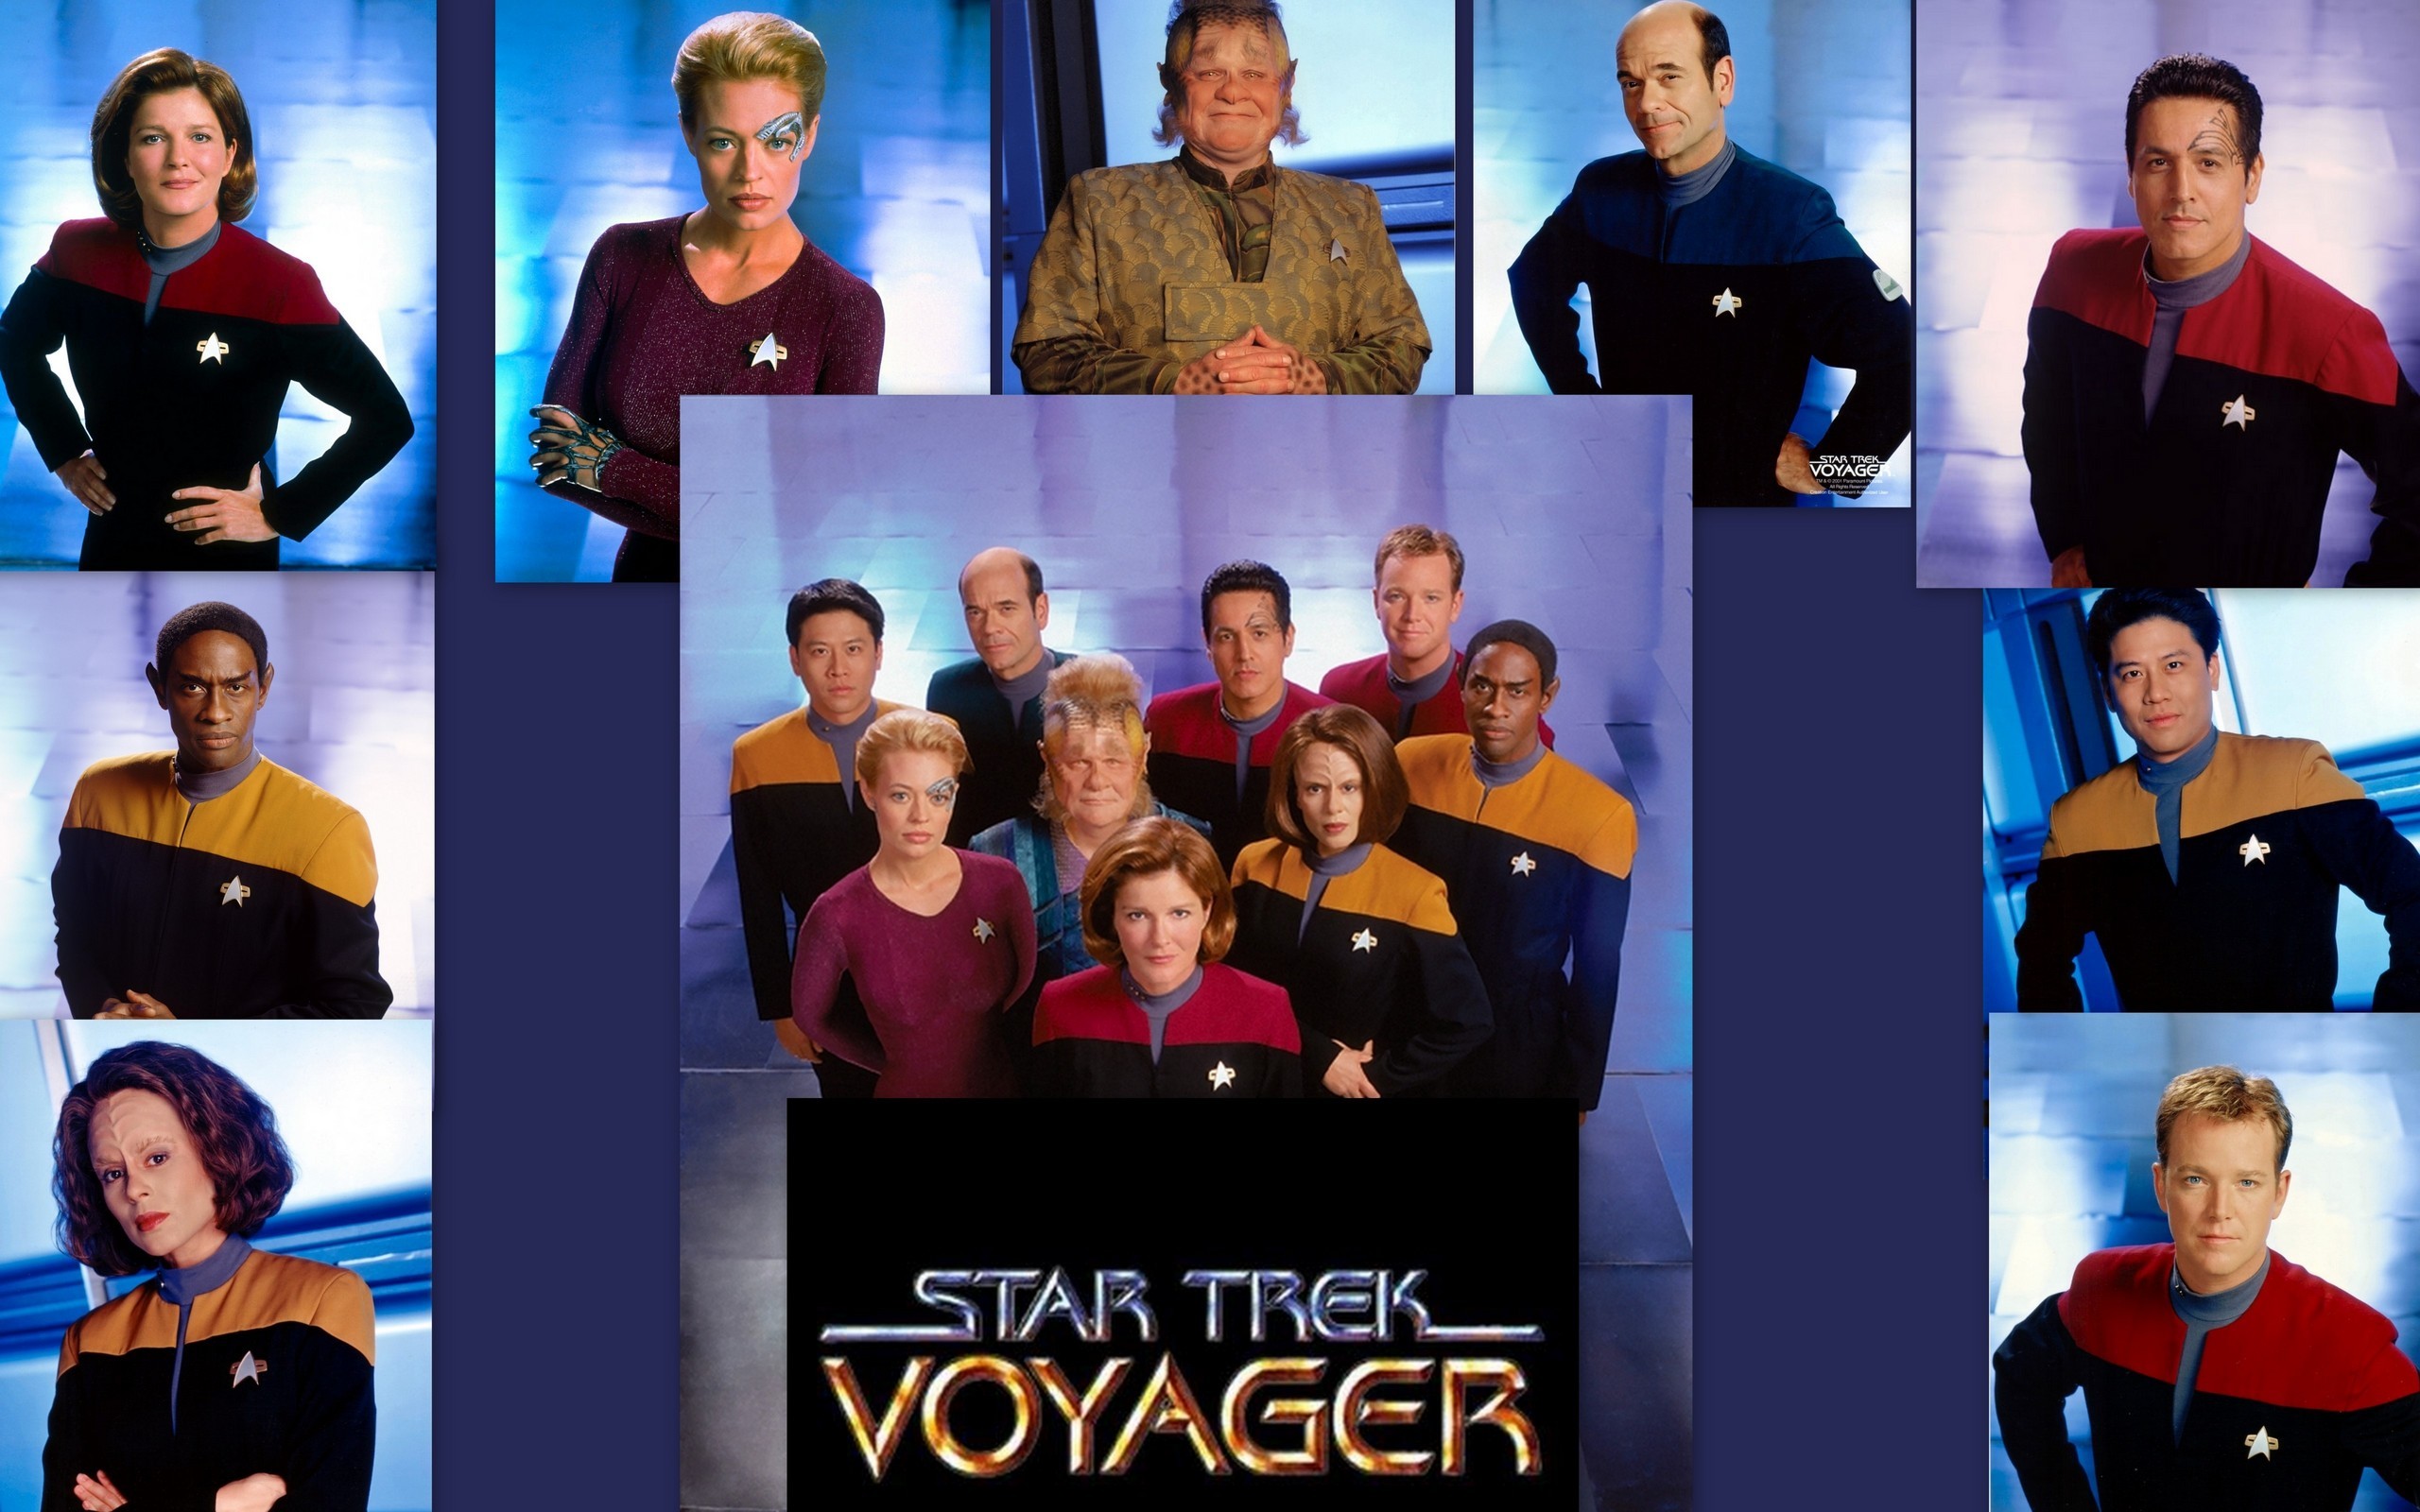 2560x1600 Wallpapers - Star Trek Voyager Wallpaper (10524240) - Fanpop